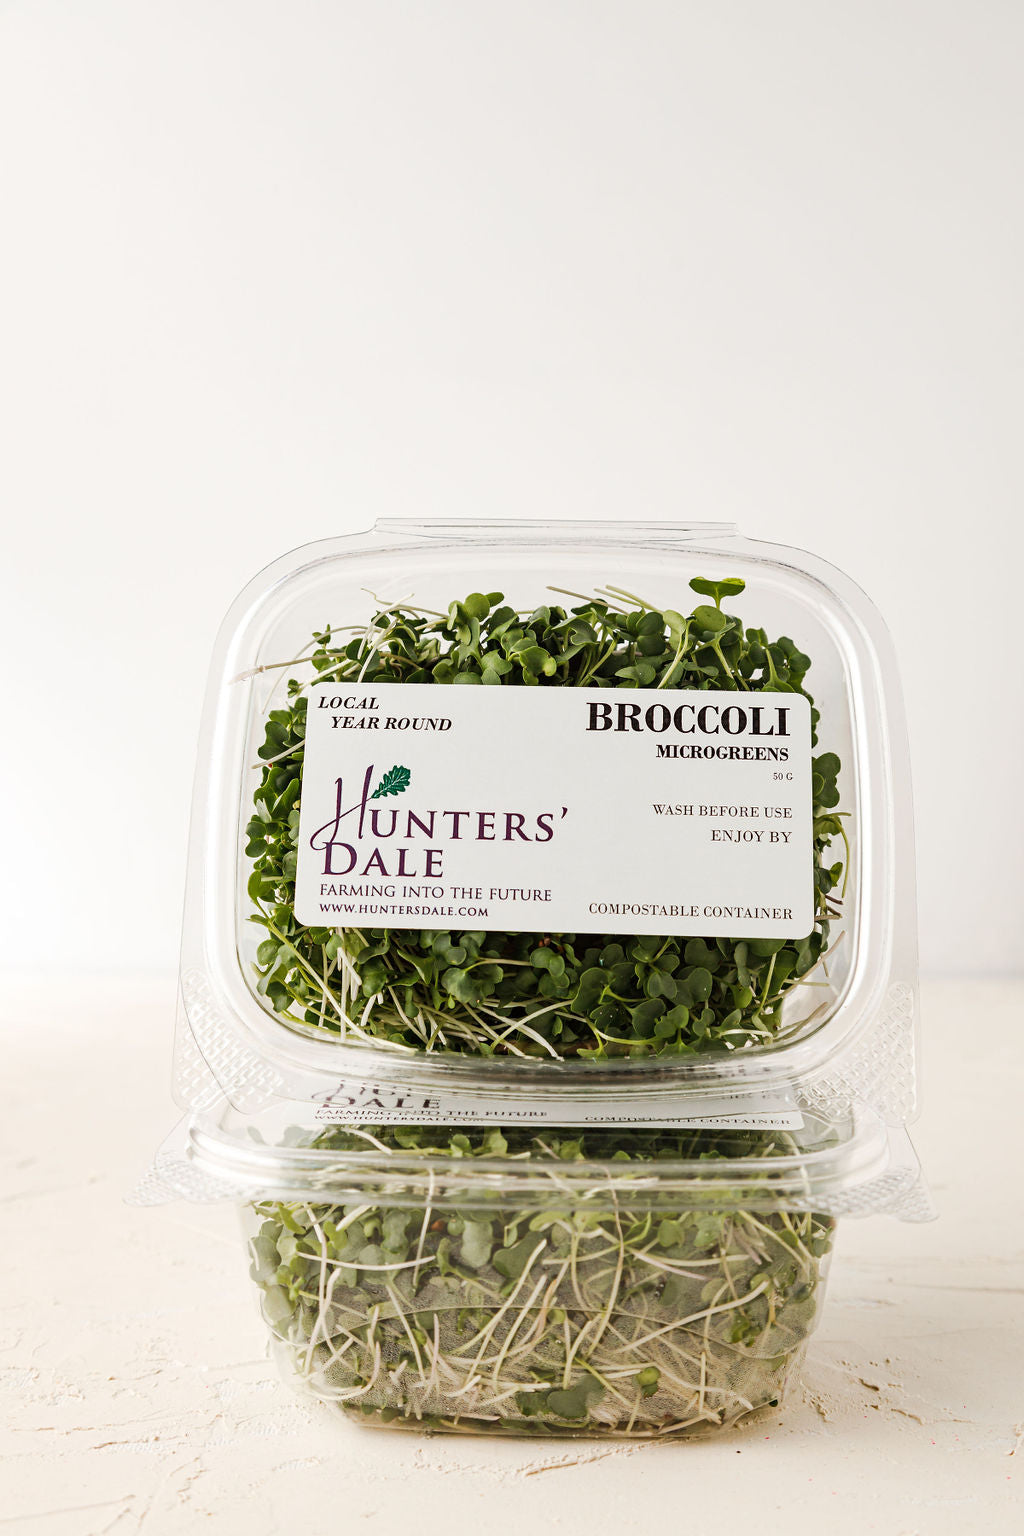 Broccoli Microgreens 50g/Box - Hunters’ Dale